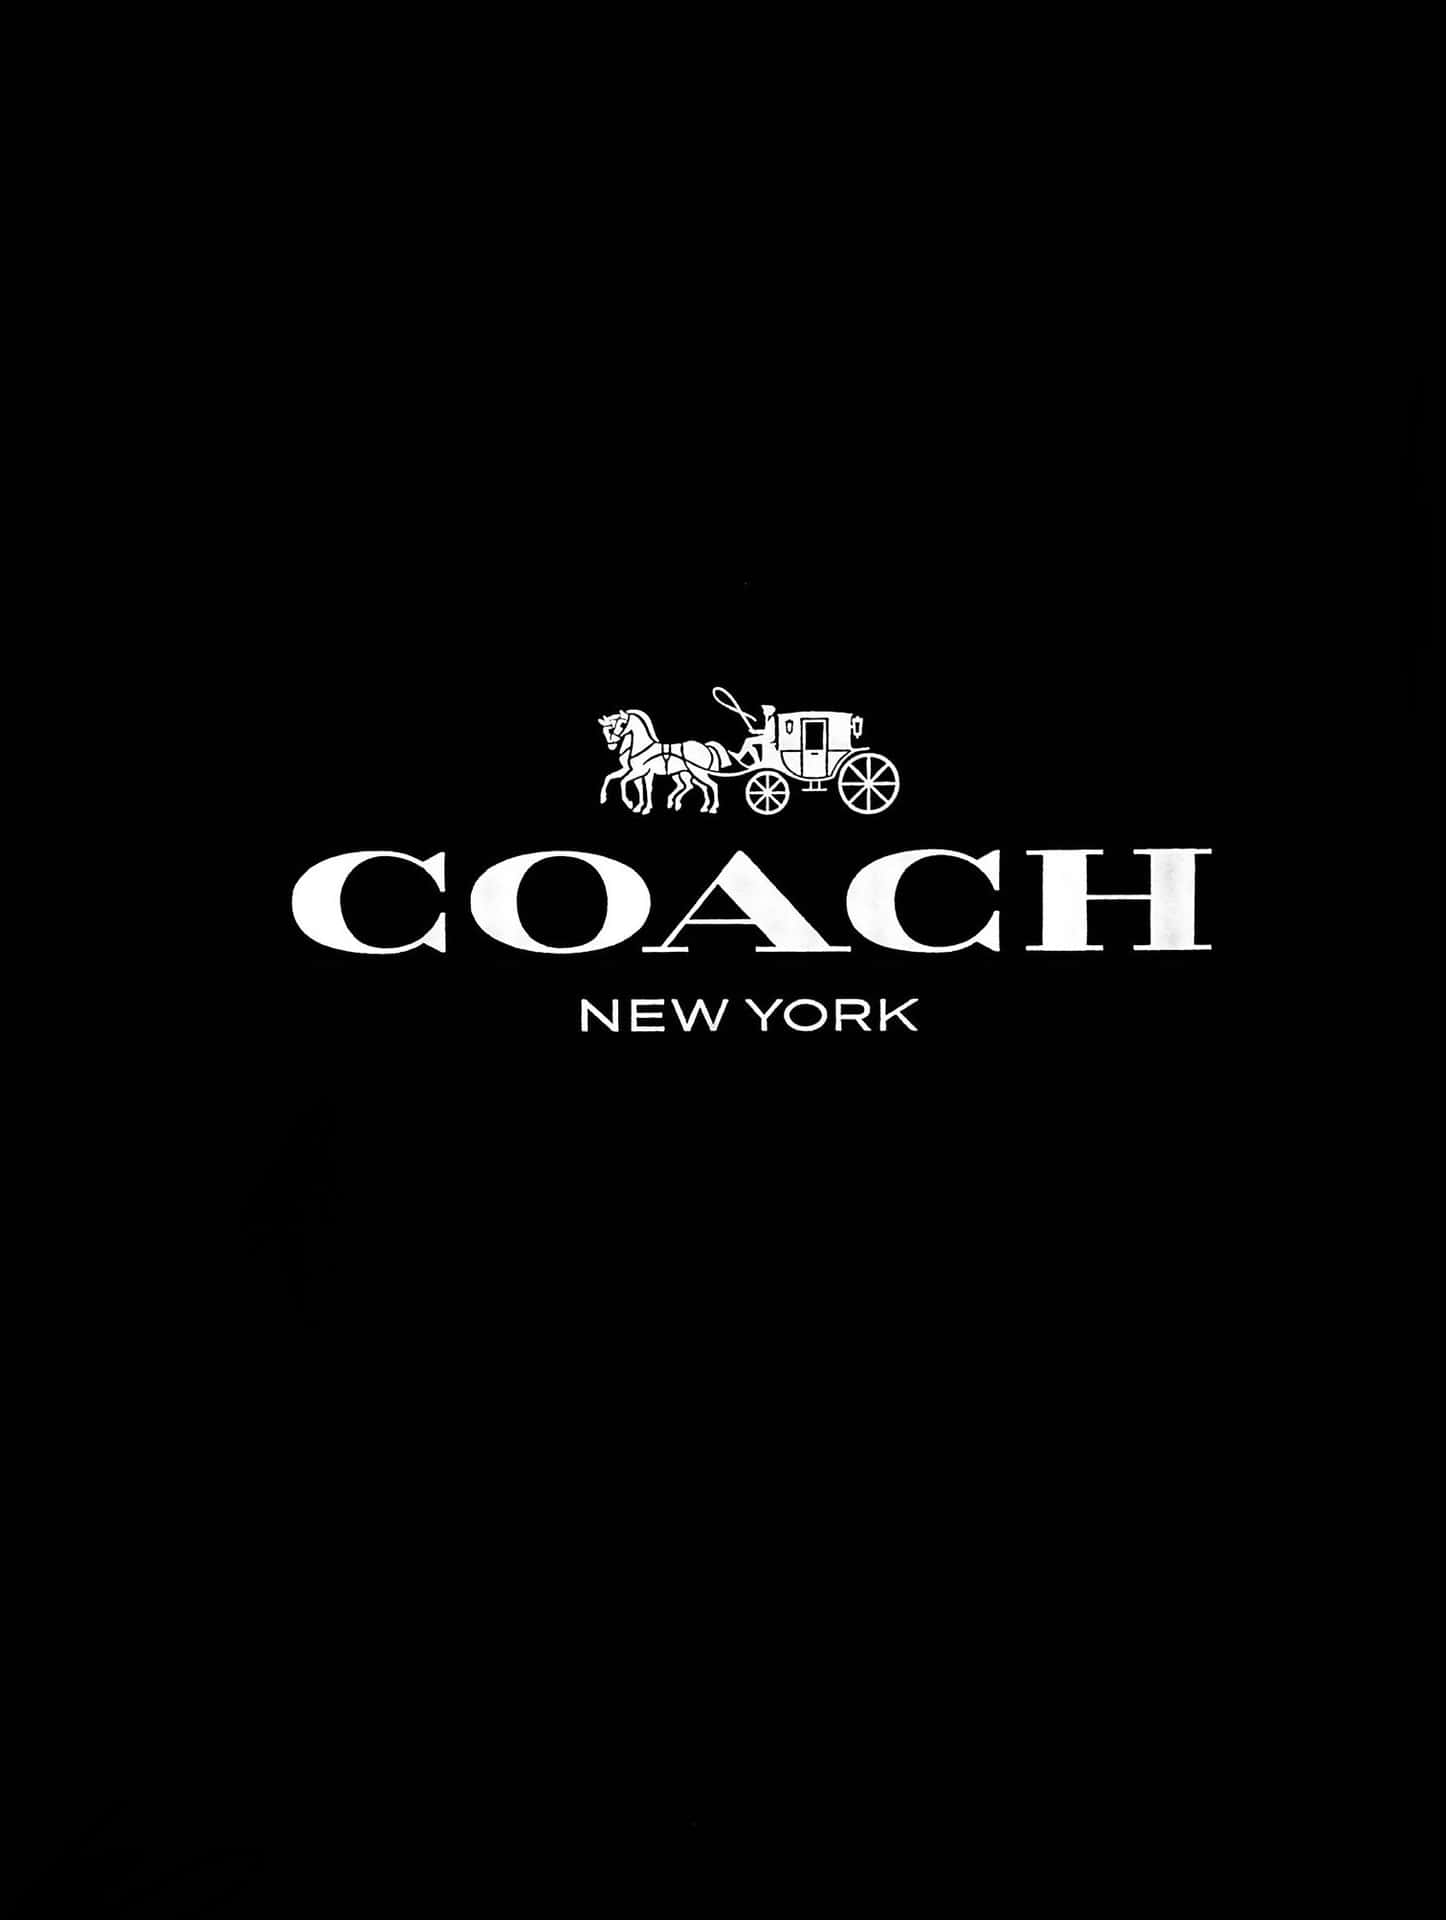 Logodi Coach New York Su Uno Sfondo Nero